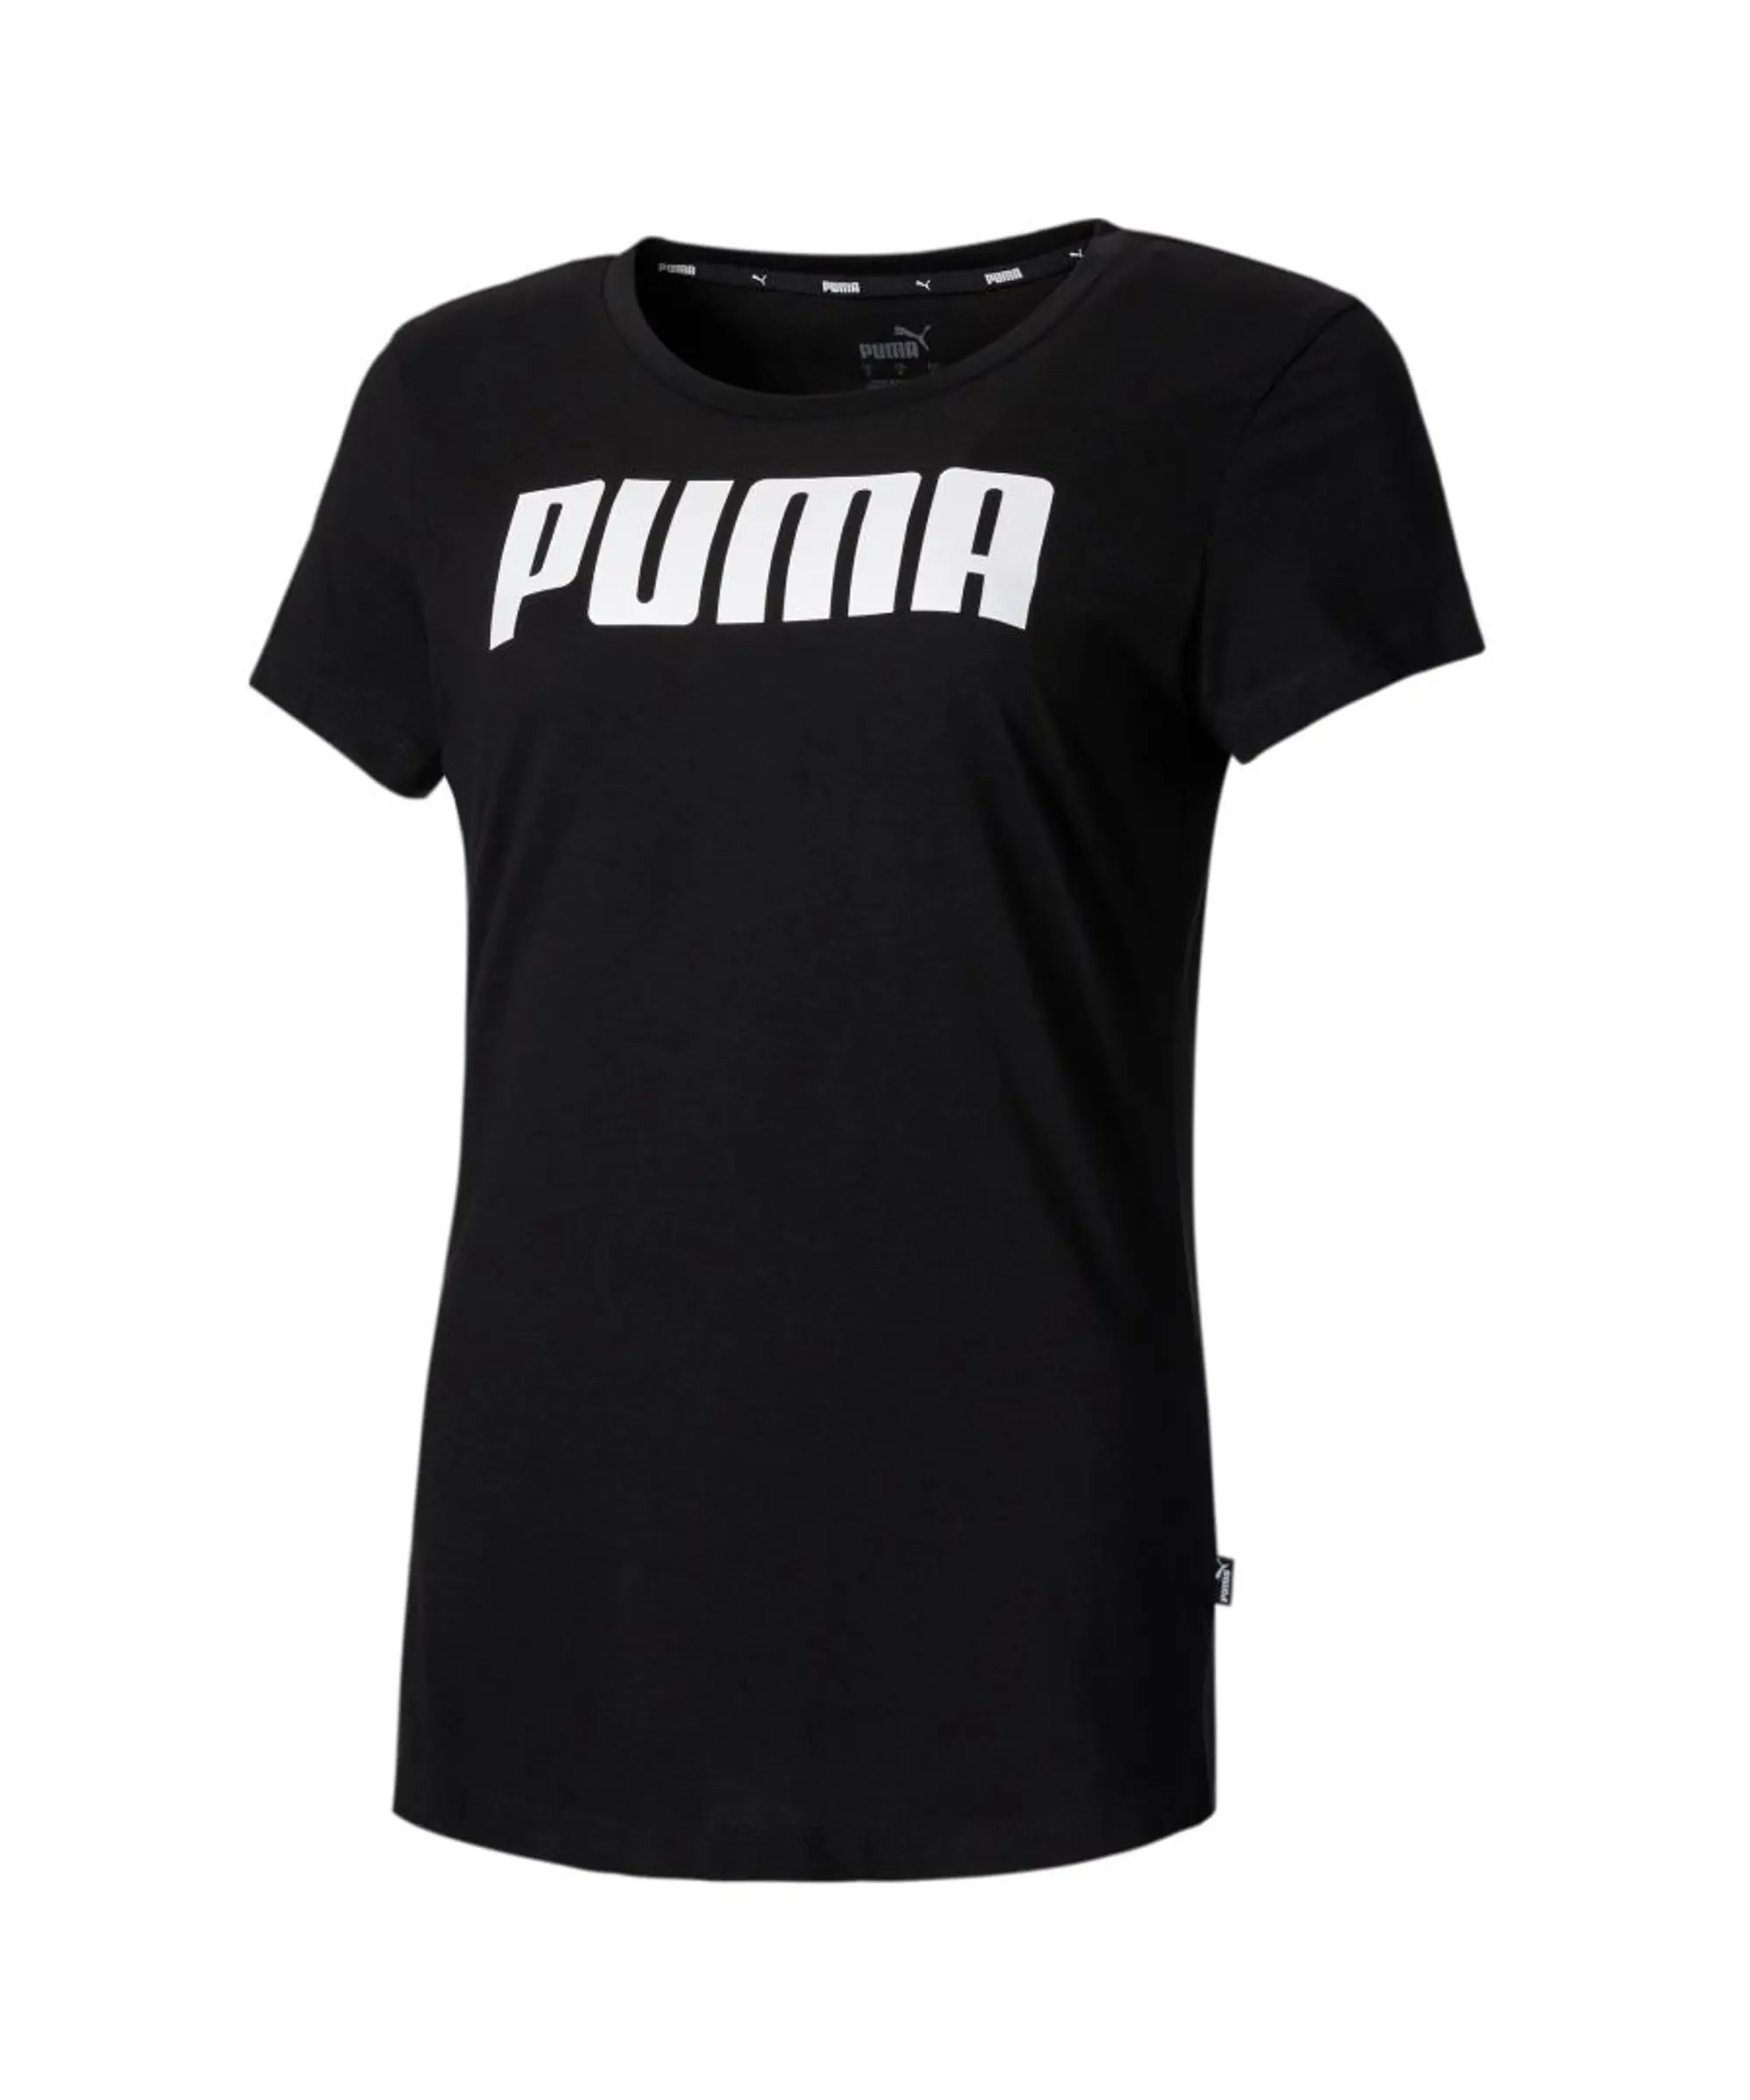 847195_01 - Womens Tee Black Essentials T-Shirt Puma |